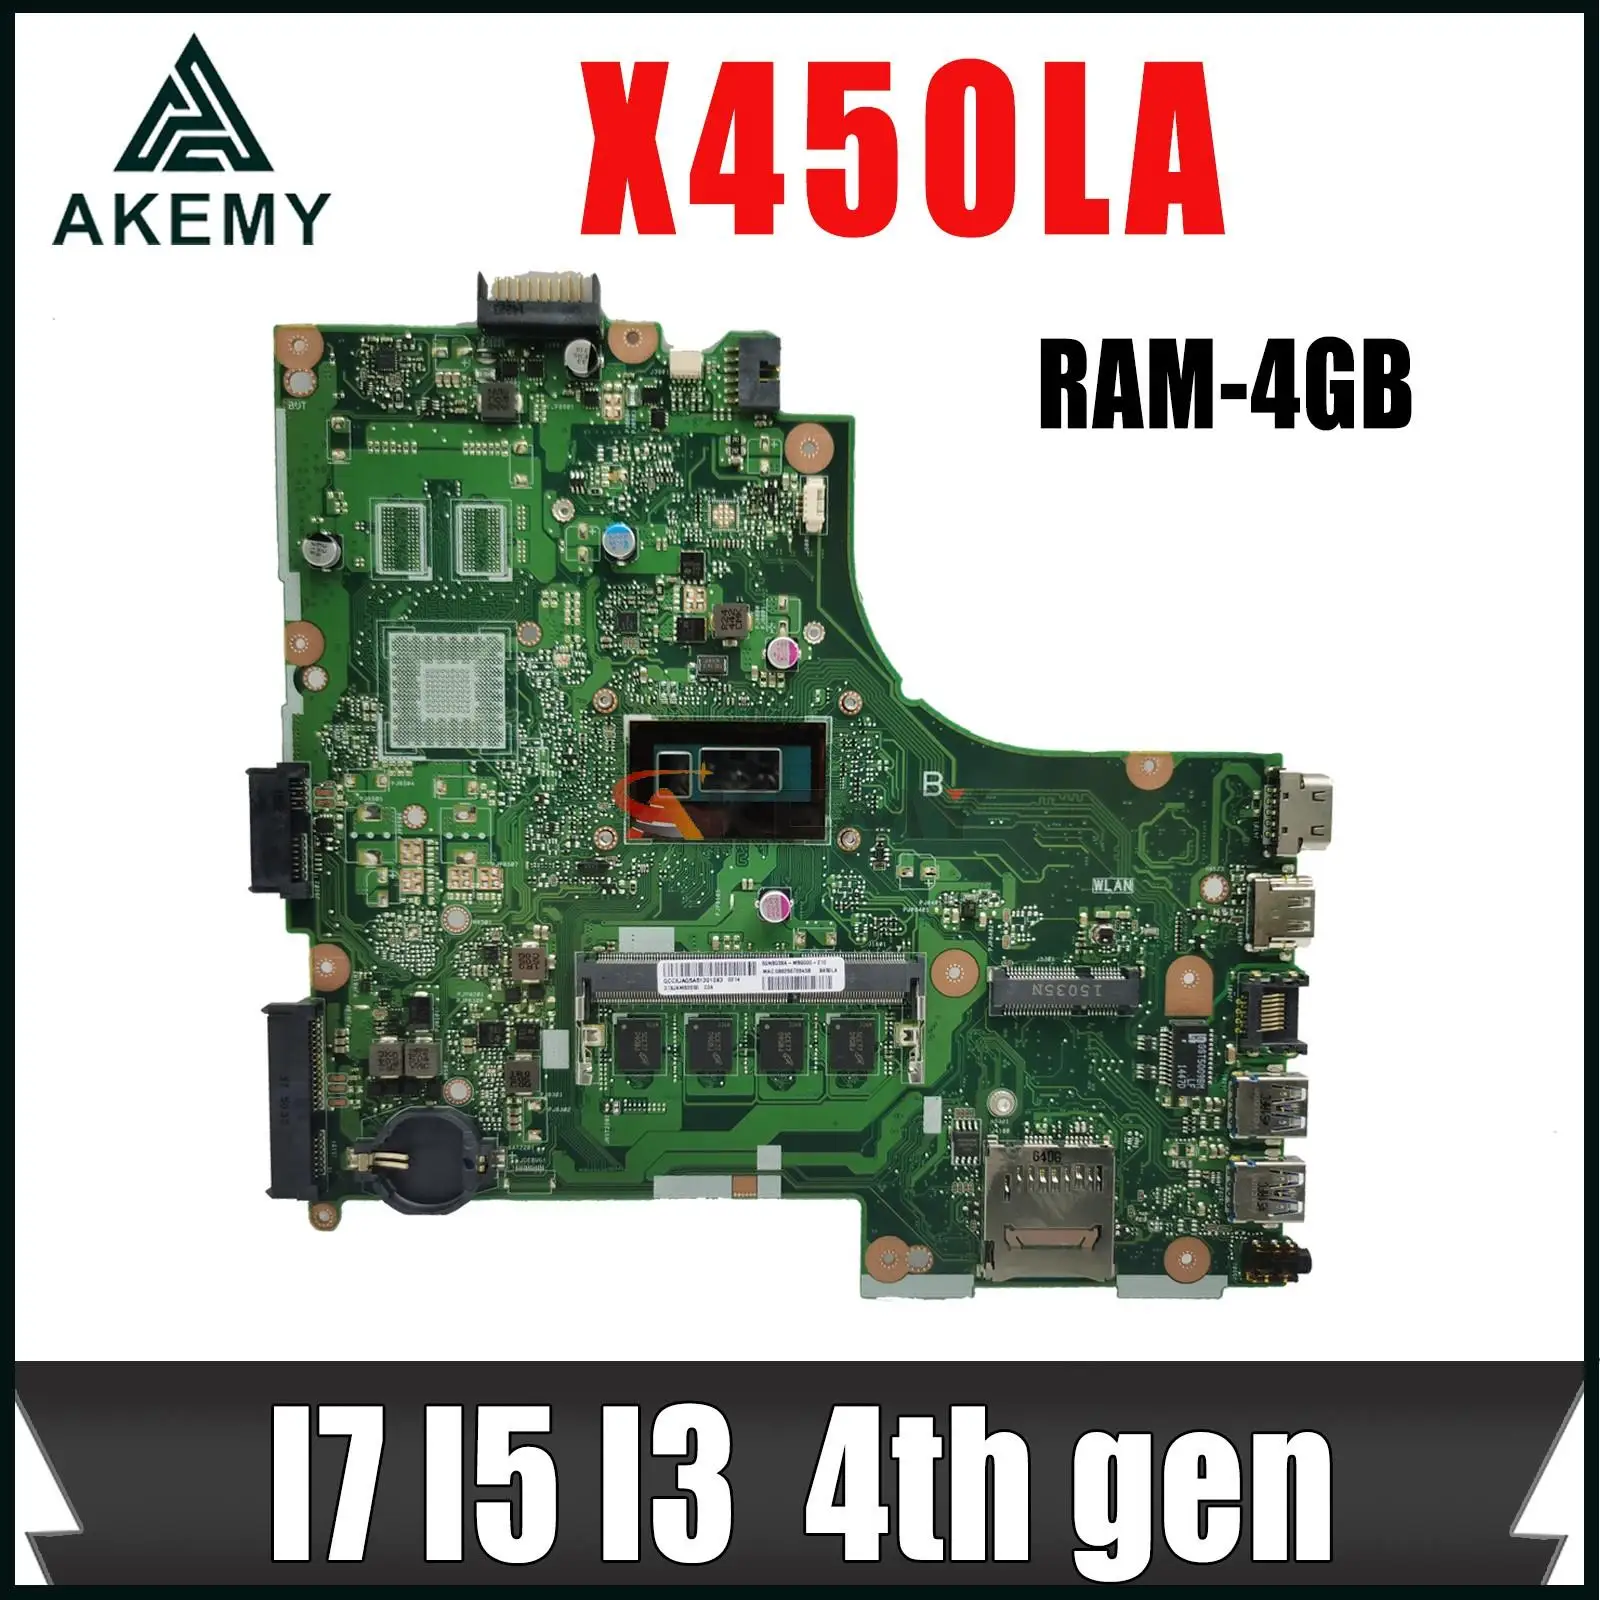 

X450LA Notebook Mainboard For ASUS X450LC X450L X450LB Laptop Motherboard I7-4500U I5-4200U I3-4010U RAM-4GB UMA EDP /LVDS